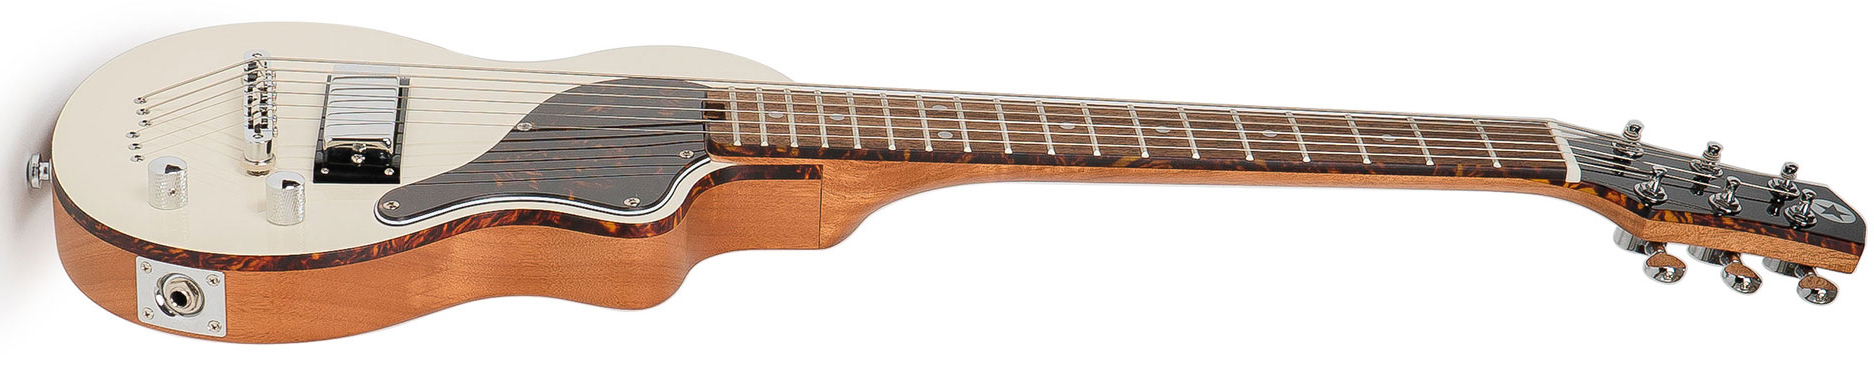 Blackstar Carry-on Travel Guitar Standard Pack +amplug2 Fly +housse - White - Pack Guitare Électrique - Variation 2